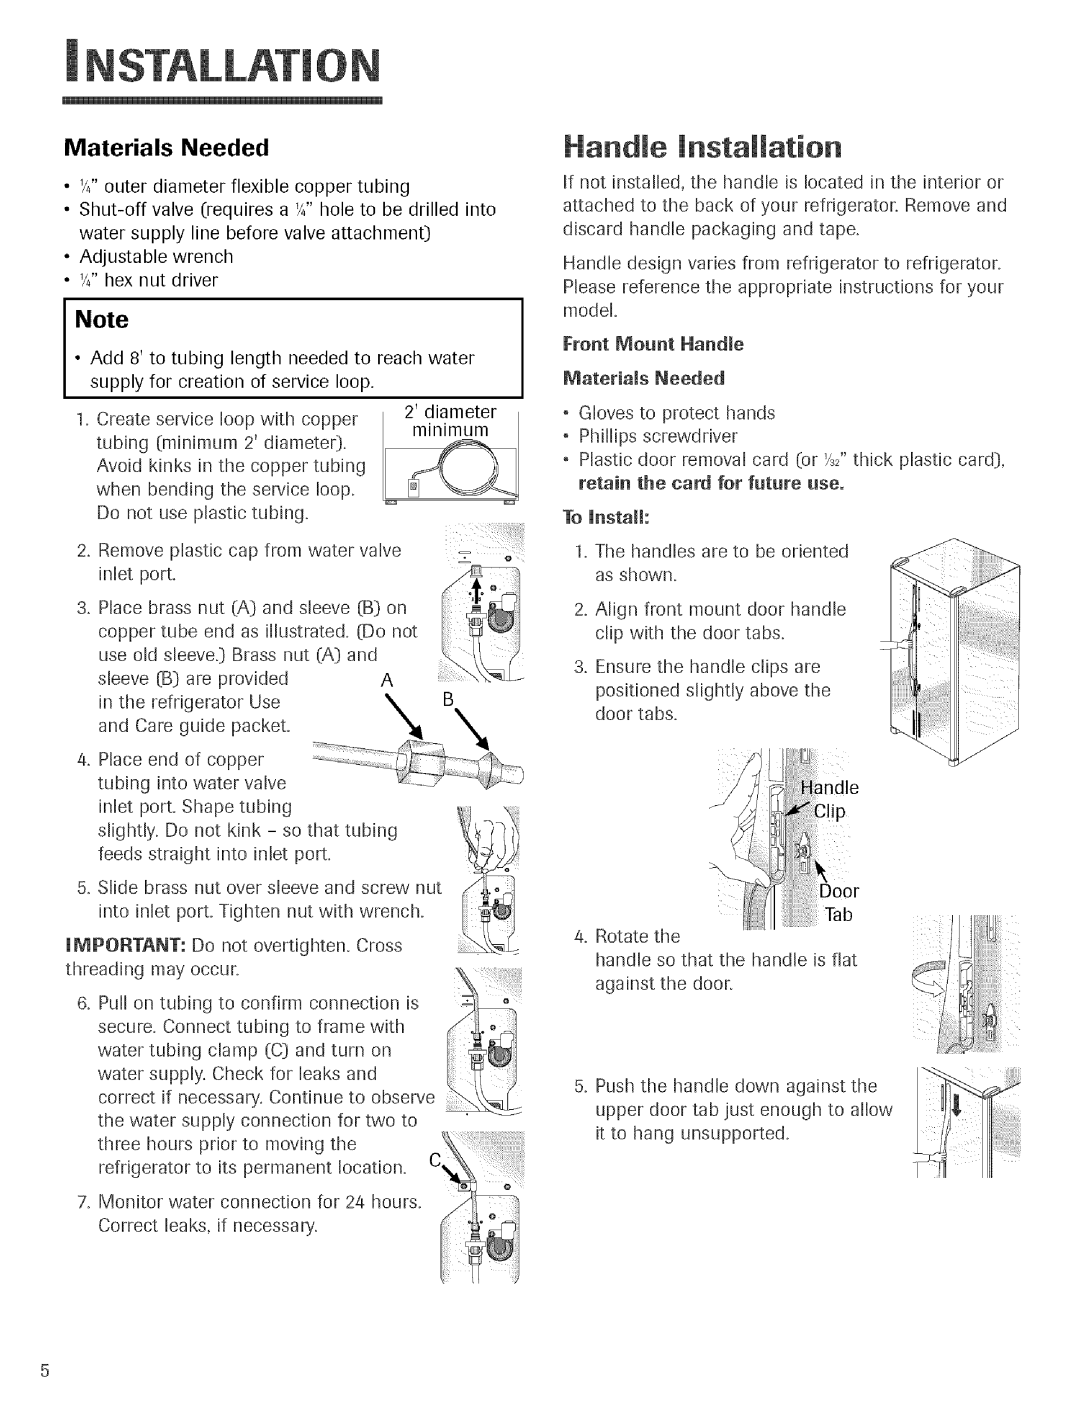 Jenn-Air Refrigerator important safety instructions Handme installation, Materials Needed 